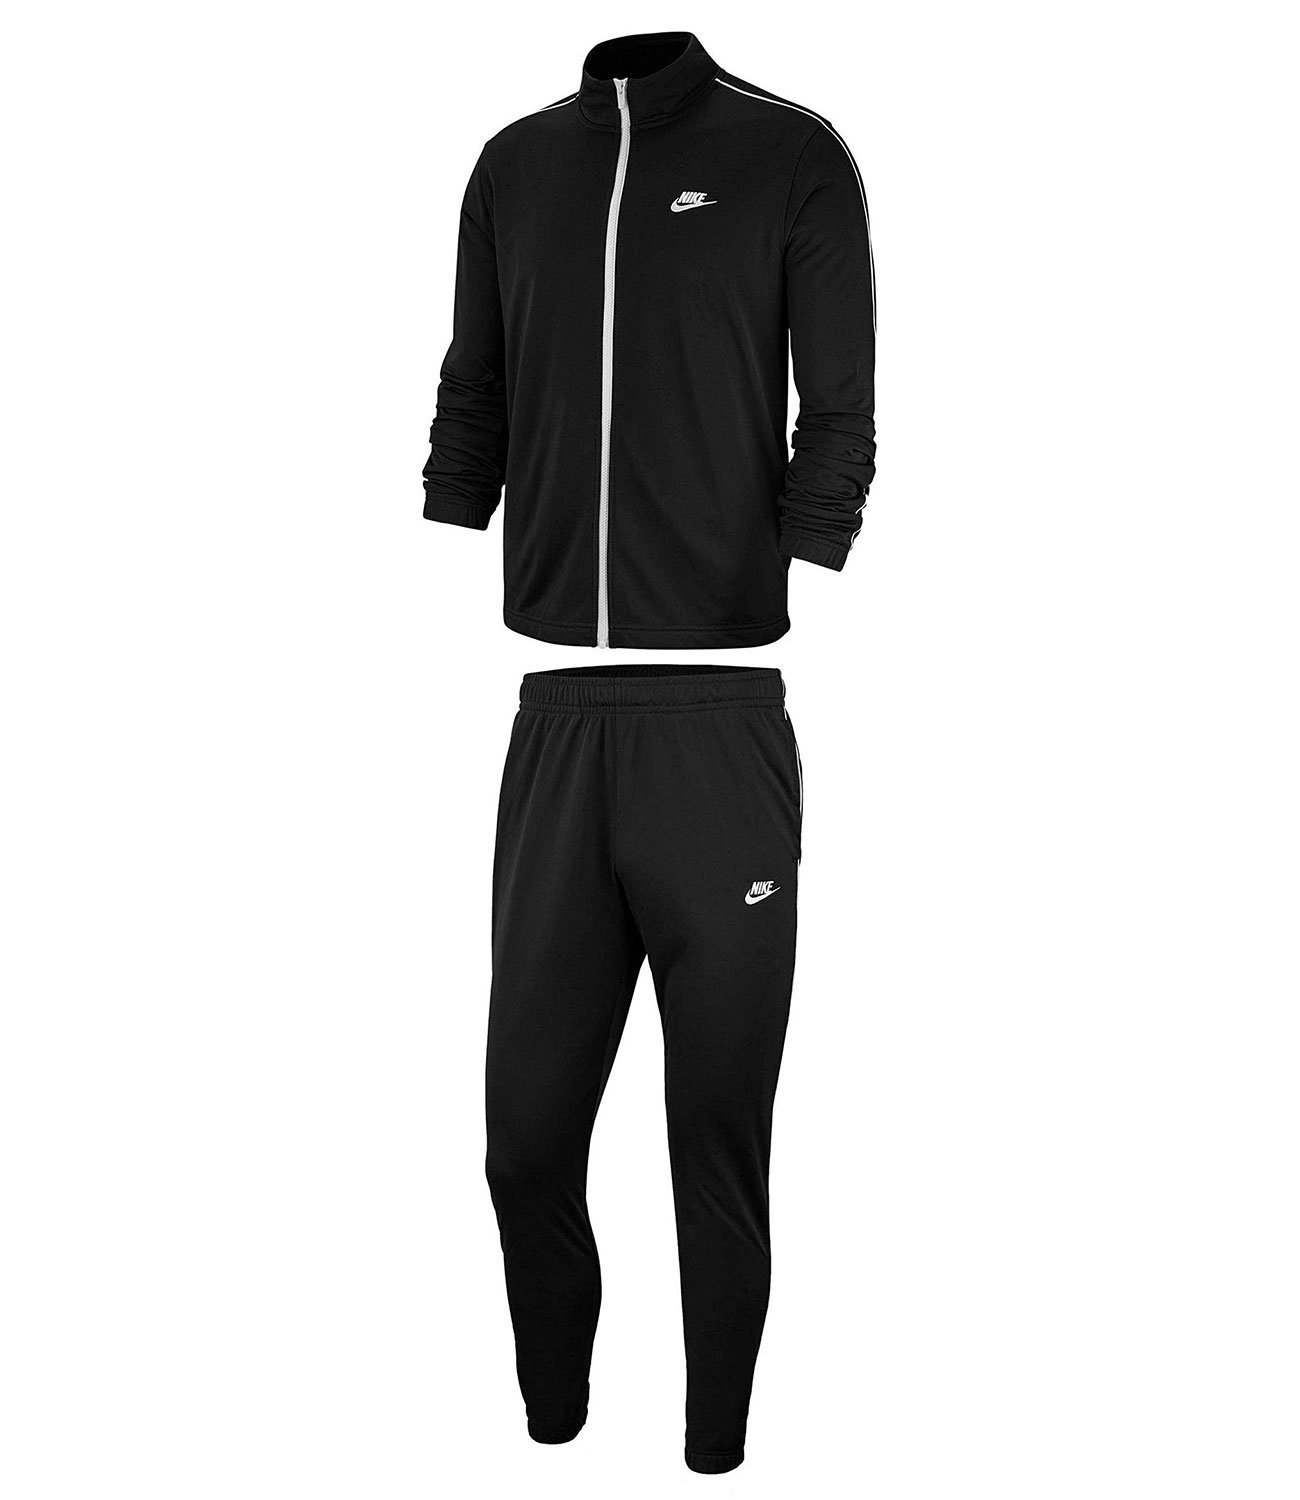 Спортивный костюм б. Черный спортивный костюм Nike bv3034-010. Nike bv3034-010. Черный спортивный костюм Nike Woven 886511-010. Nike Tracksuit костюм мужской.